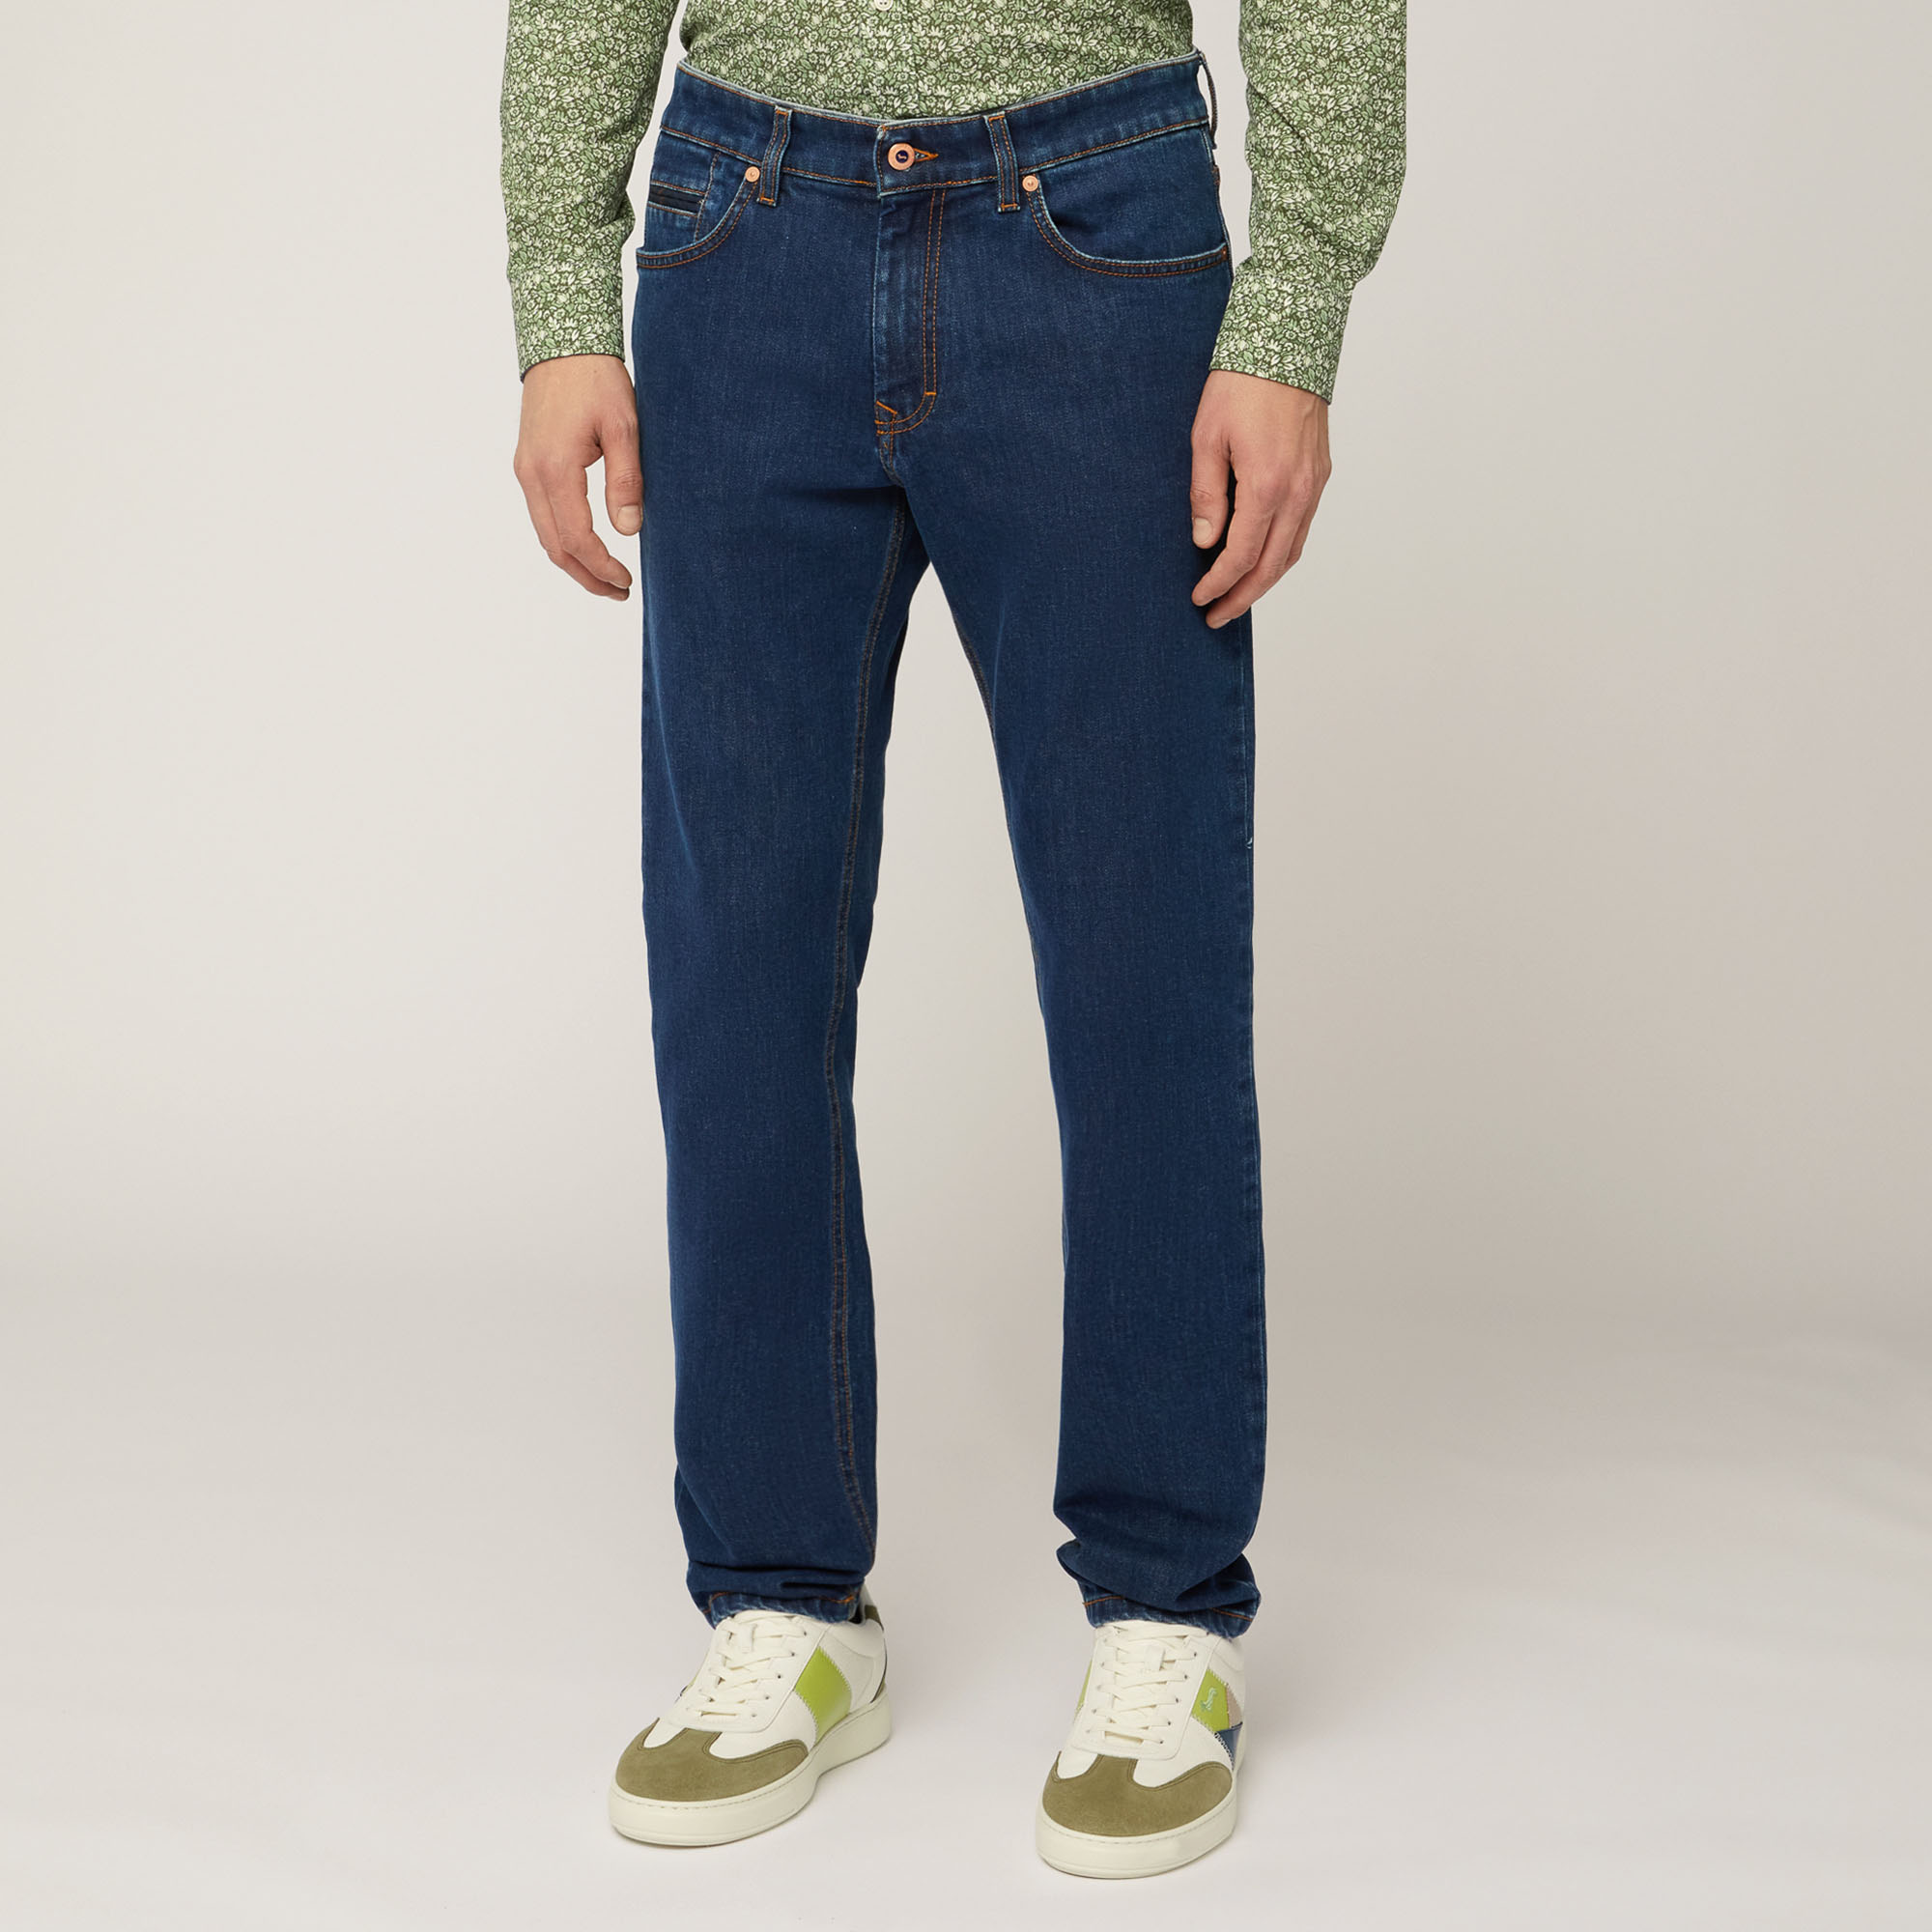 Harmont & Blaine 02 Blue Stretch Denim Jeans - DOT Made